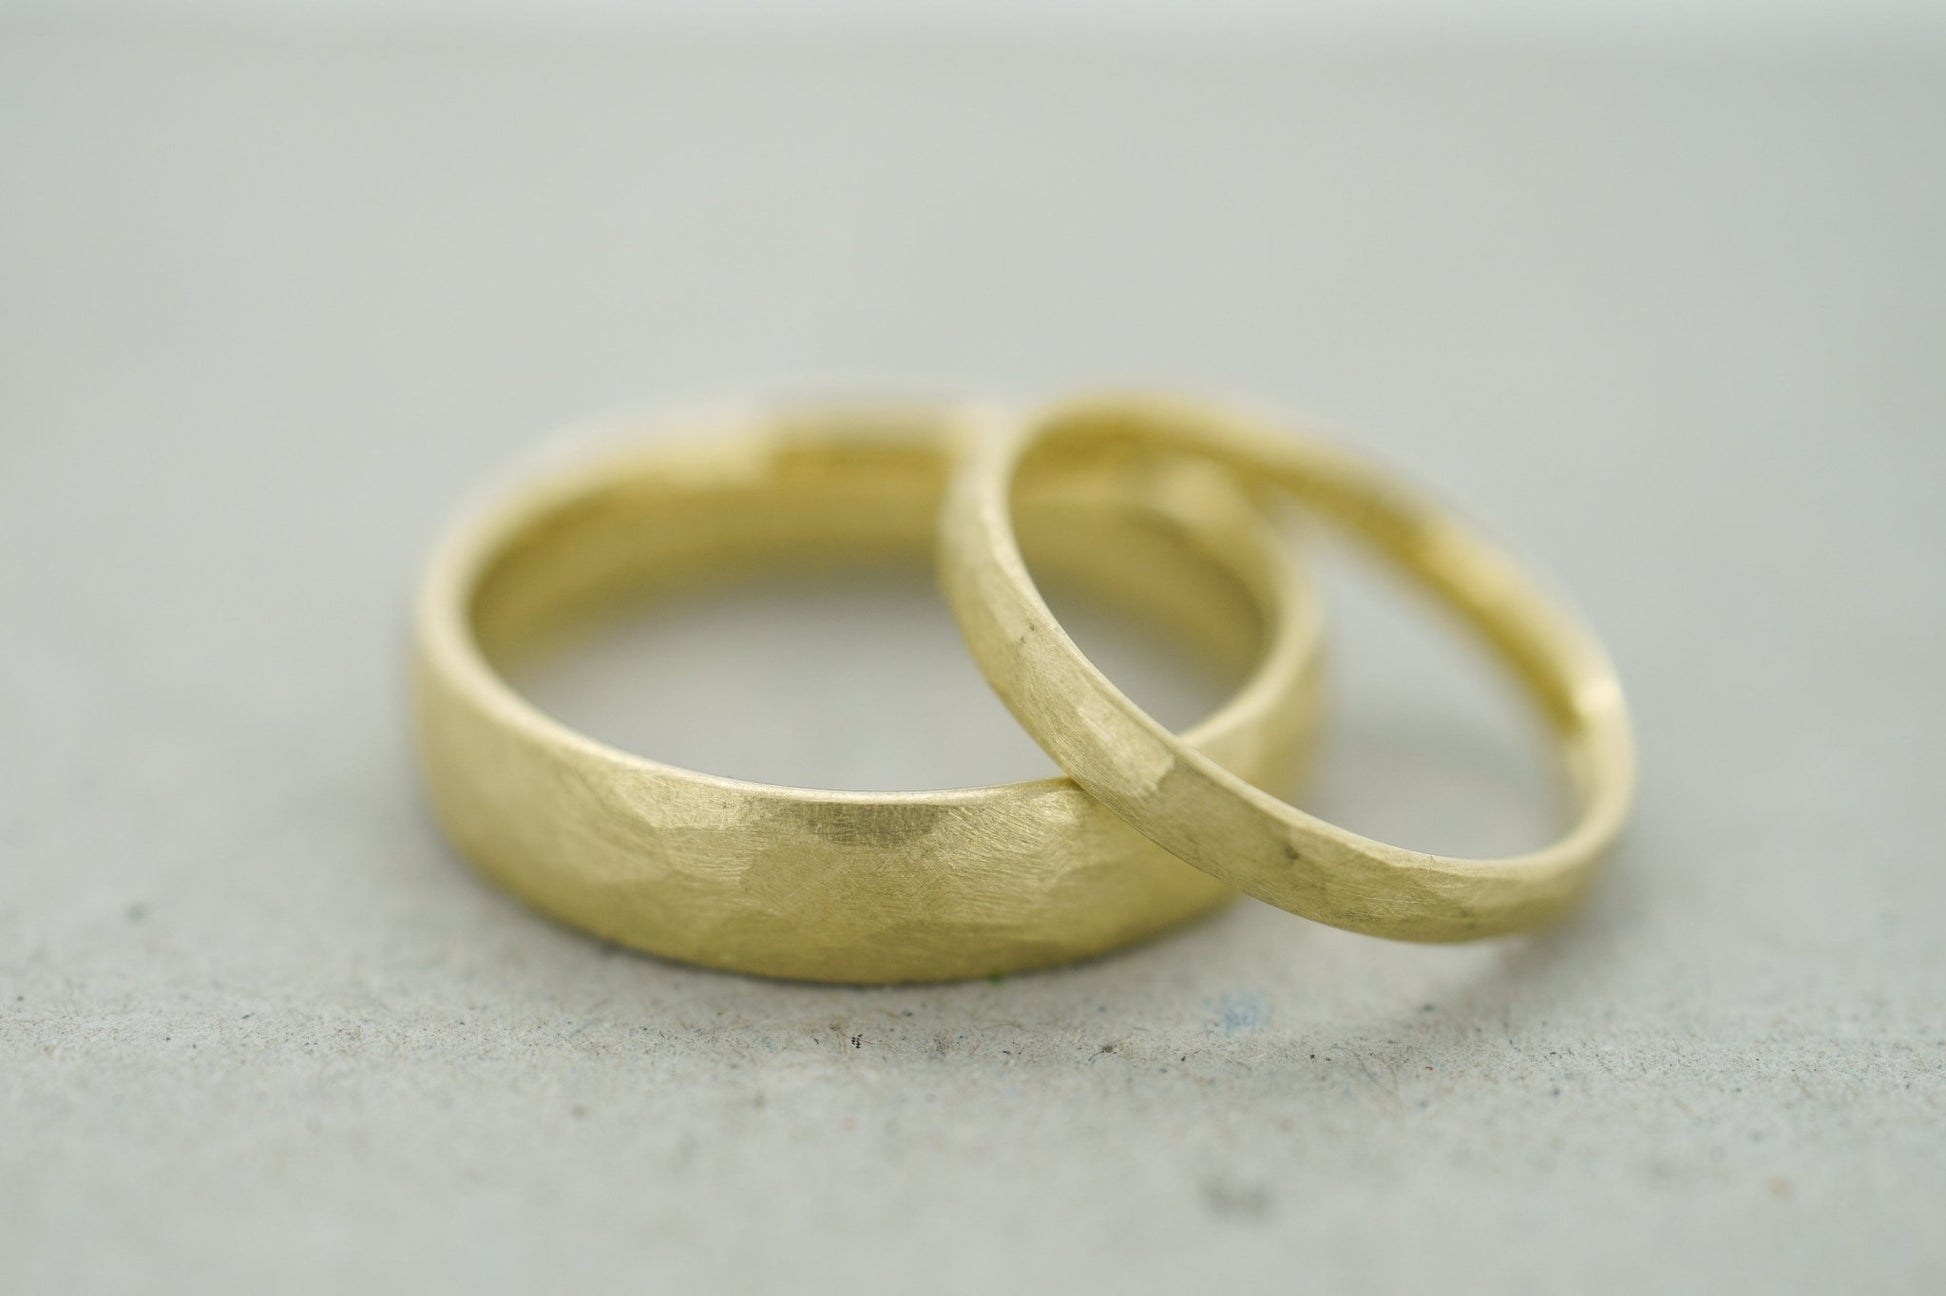 Gelbgold Eheringpaar aus Fairtrade oder recyceltem Material mit Hammerschlag - Goldschmiede Miret